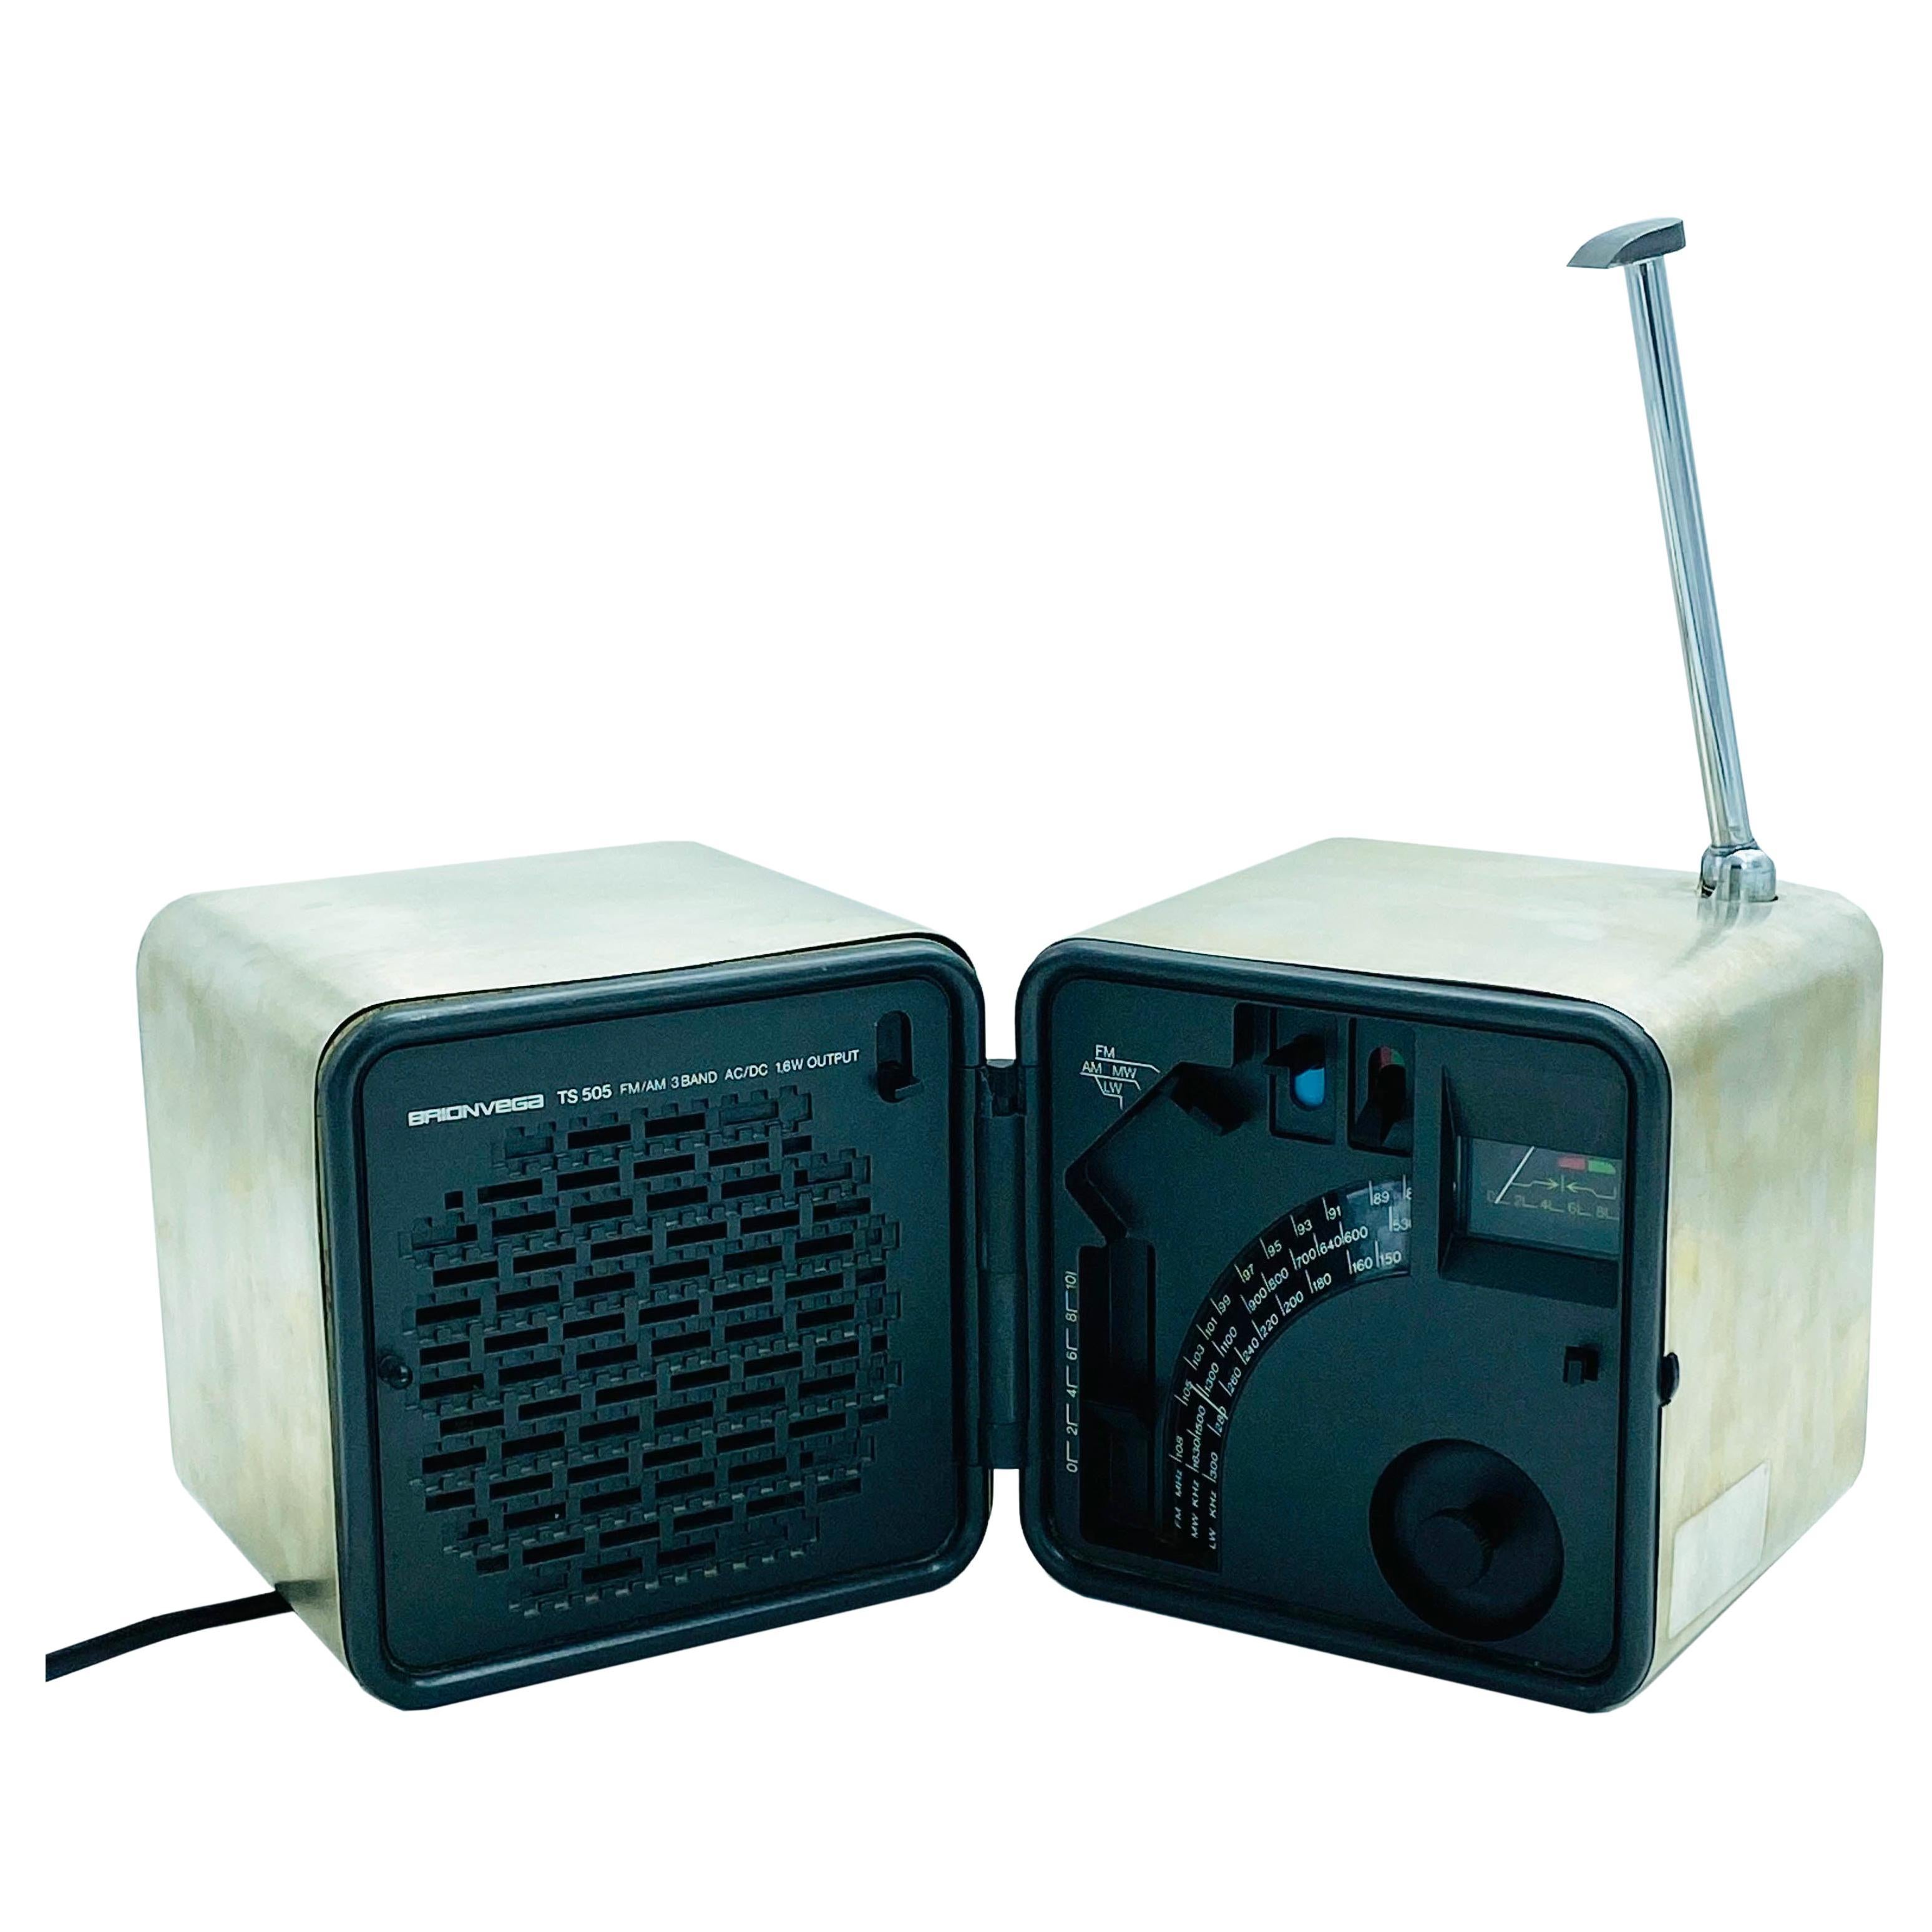 Marco Zanuso & Richard Sapper for Brionvega TS 505 Cube Radio, 1976